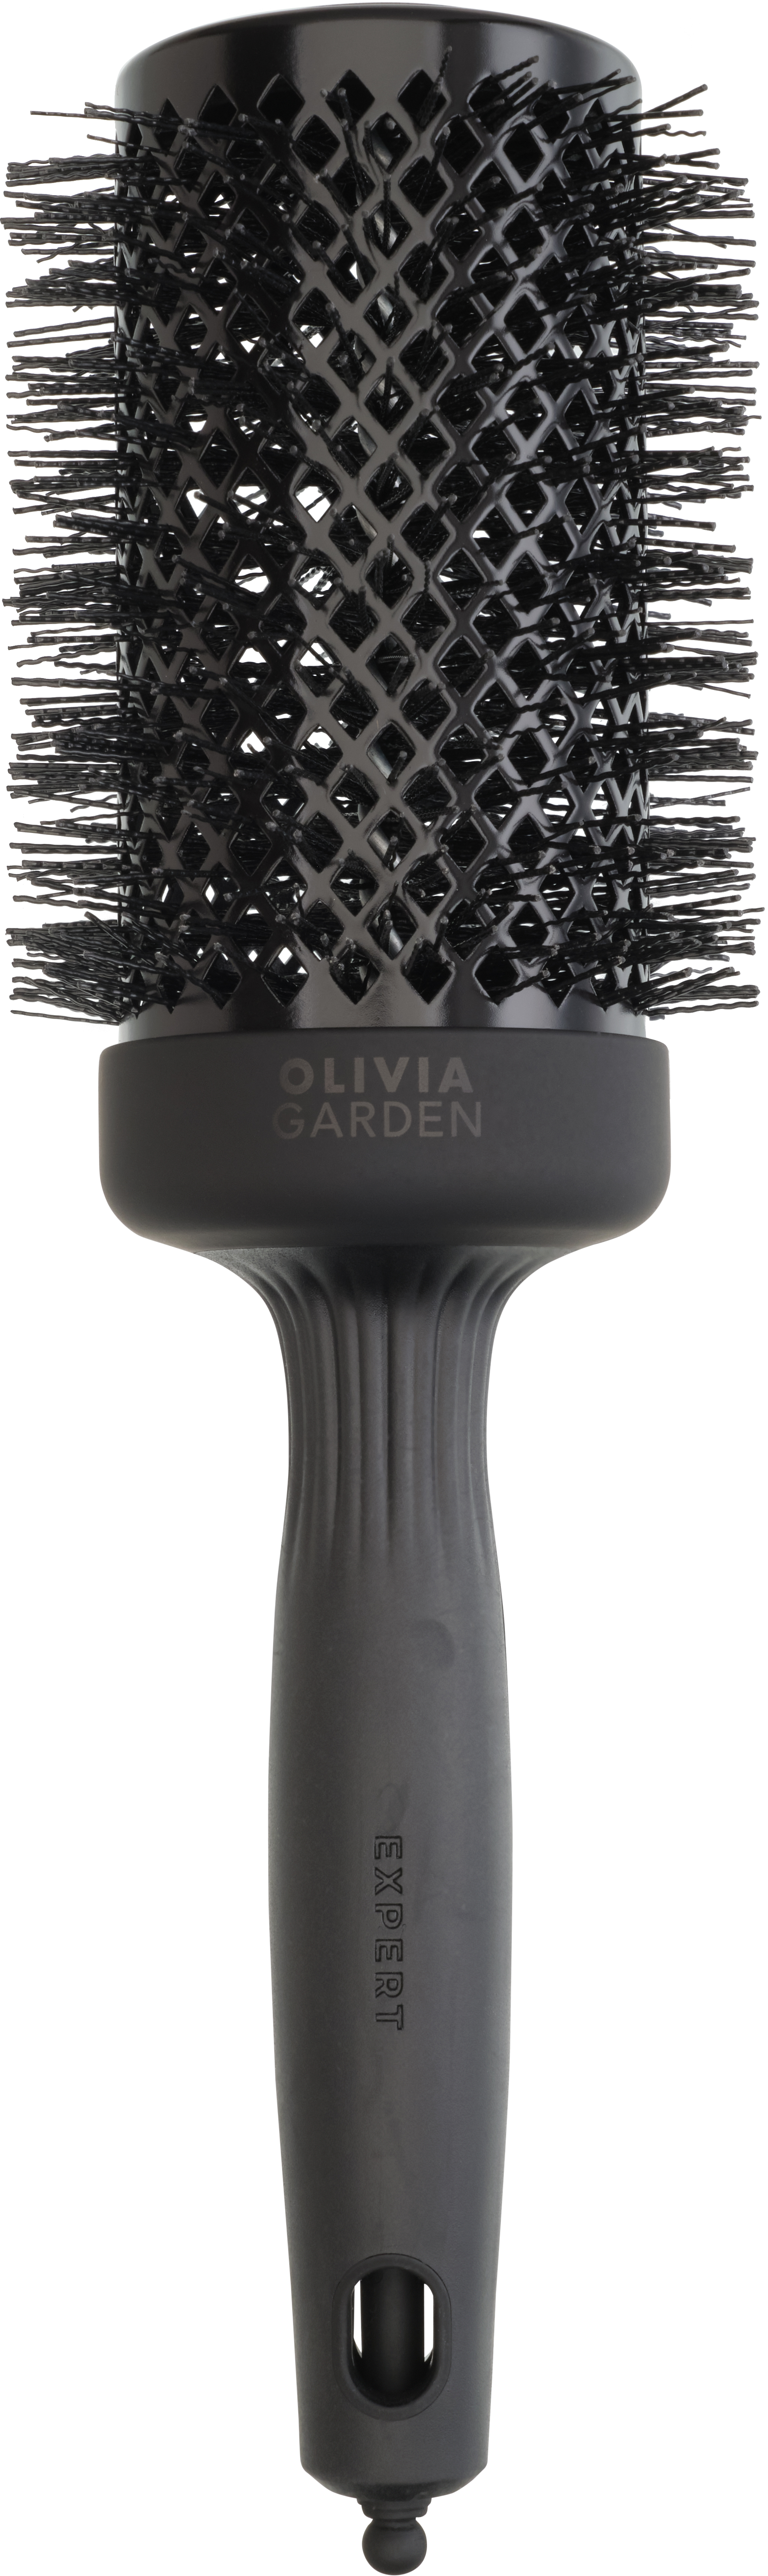 Olivia Garden Expert Blowout Shine Wavy Bristles Black Label 55